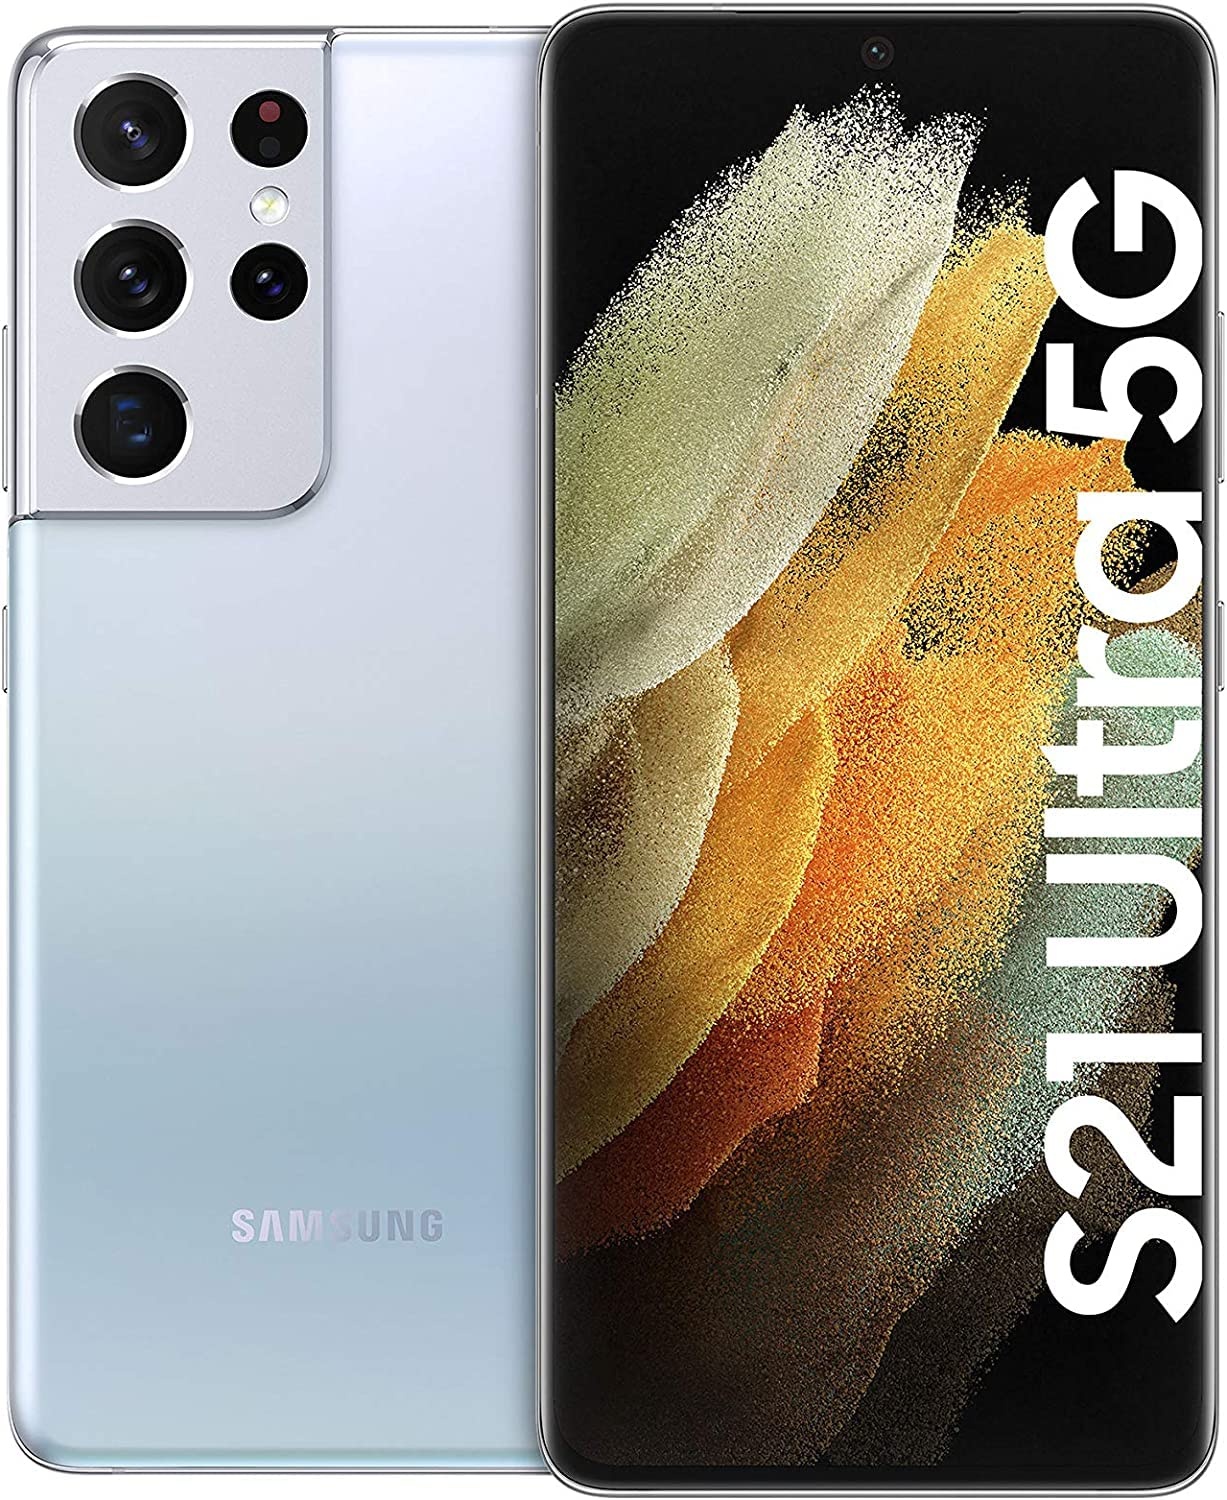 Samsung Galaxy S21 Ultra 5G Smartphone ohne Vertrag, Quad-Kamera, Infinity-O Display, Android 11 to 13 - Deutsche Version (128GB, Silver)